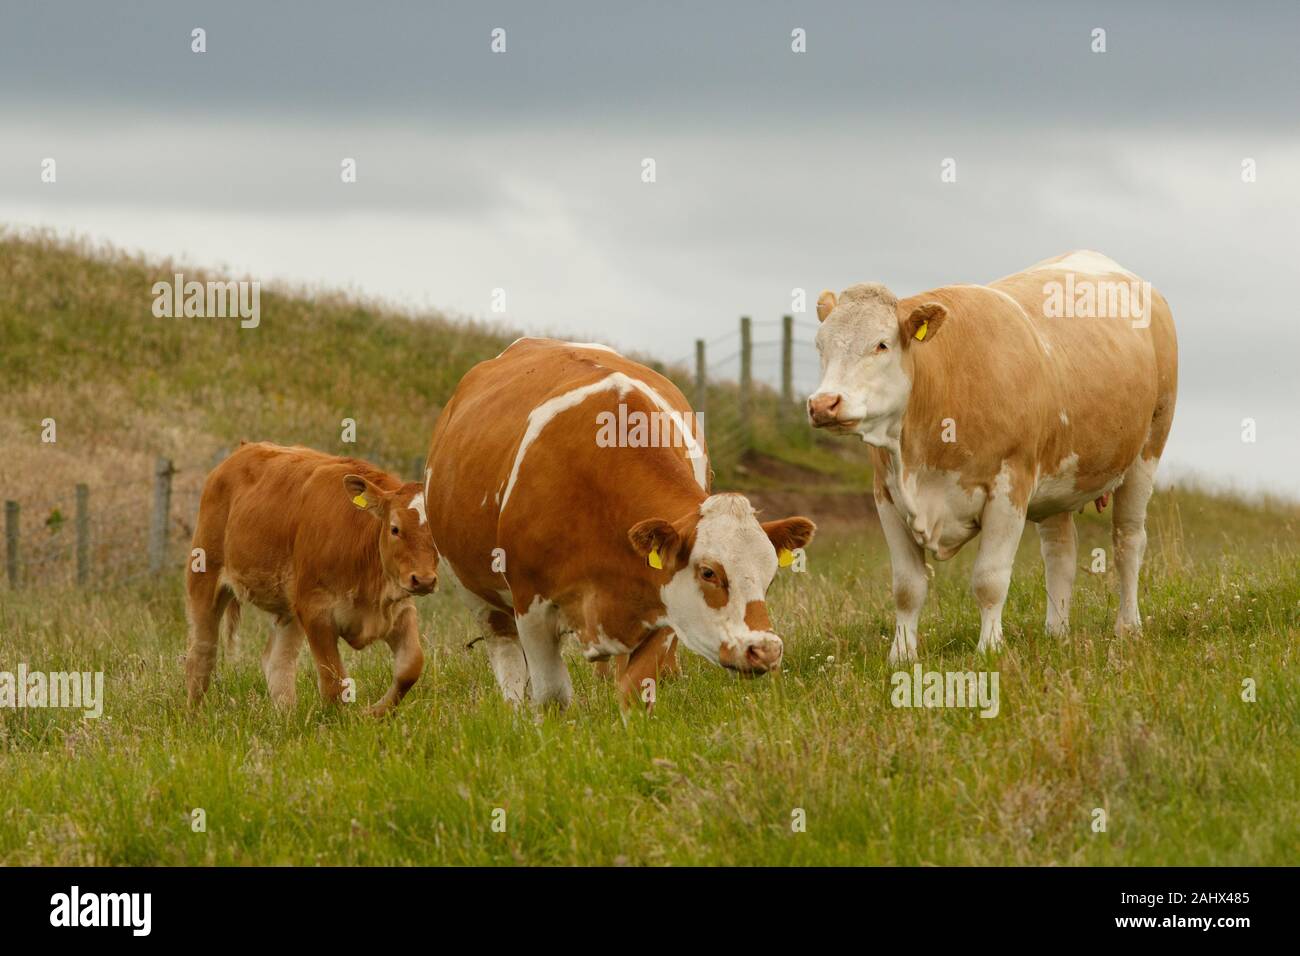 Cattle (Bos taurus) grazing on field, Scotland, United Kingdom. Stock Photo